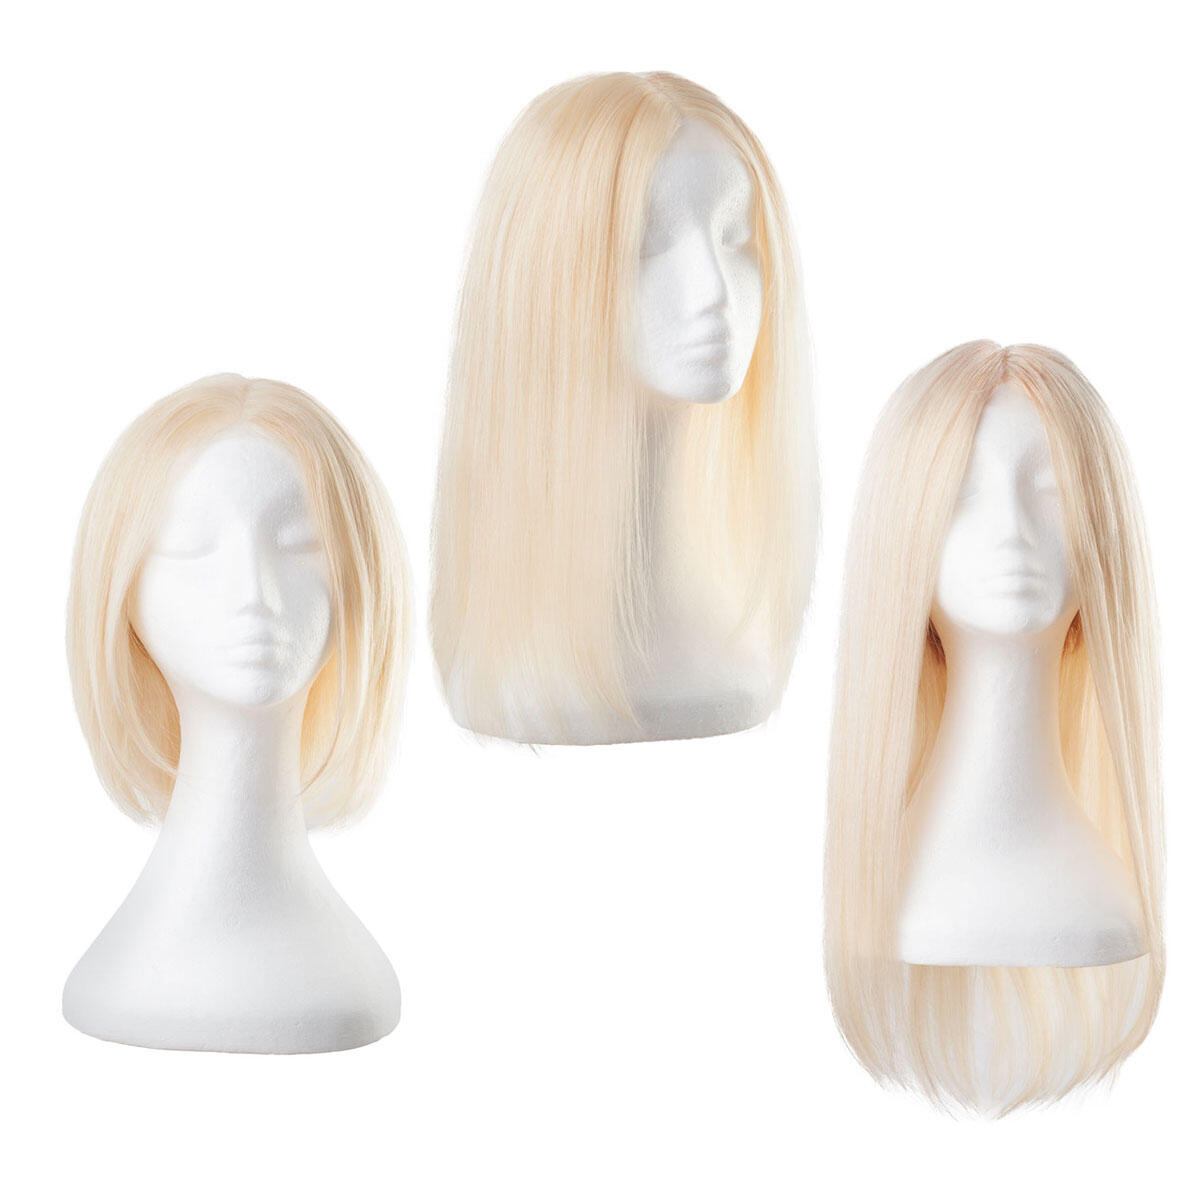 Lace Wig Human Hair 10.8 Light Blonde 45 cm